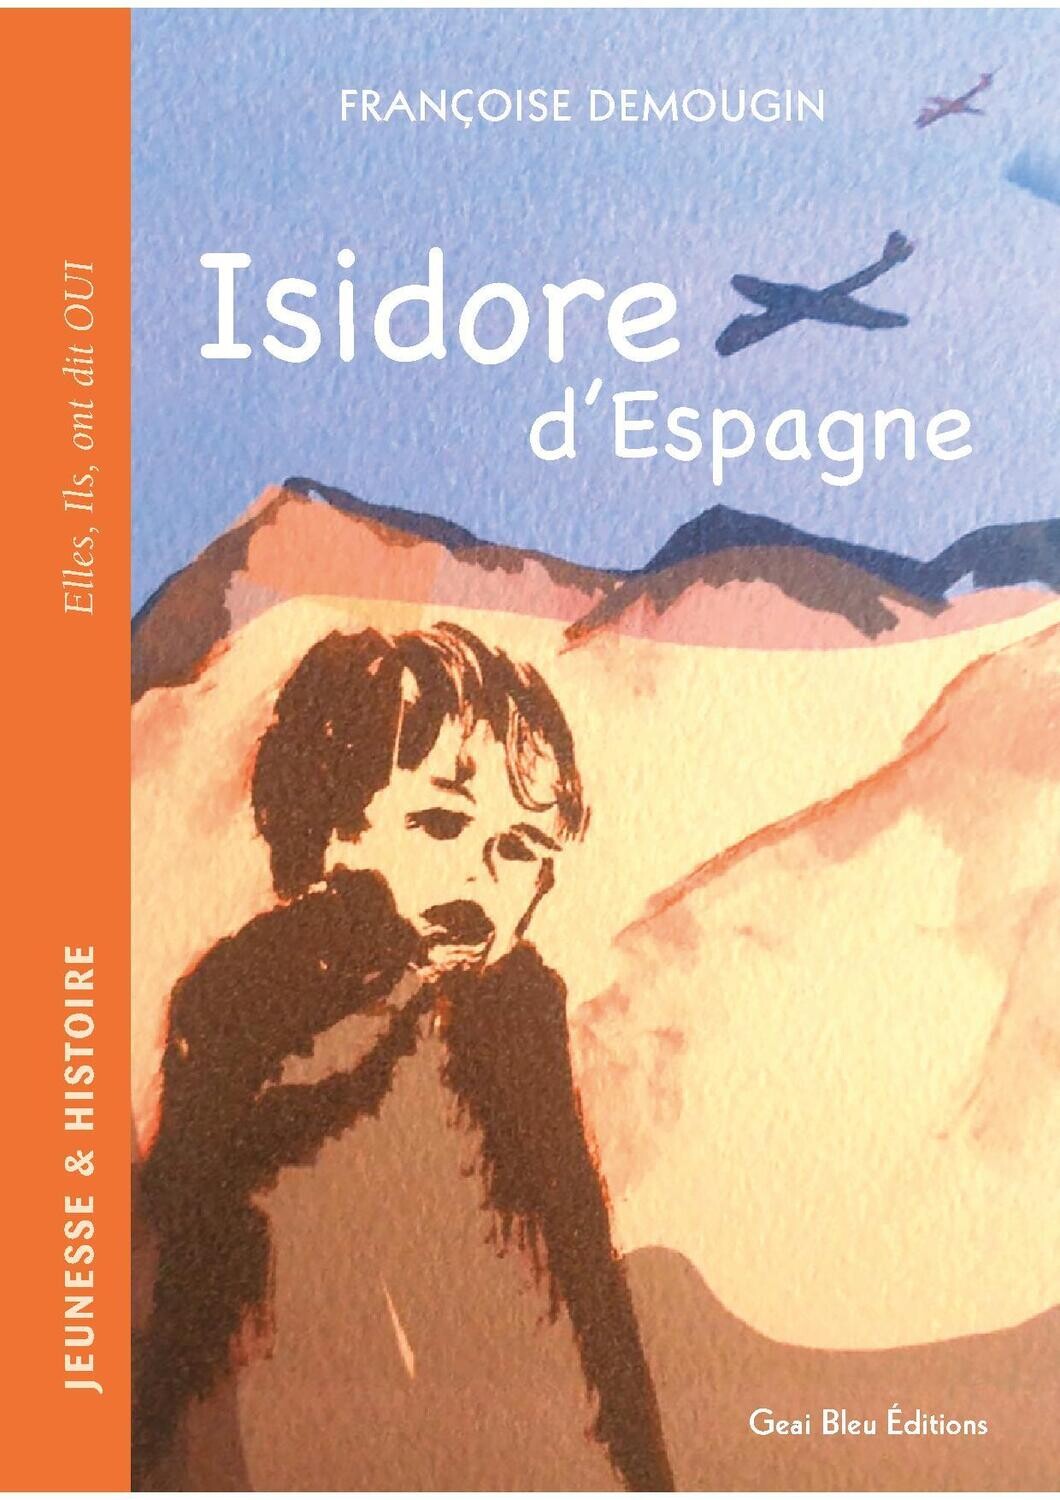 Isidore d'Espagne